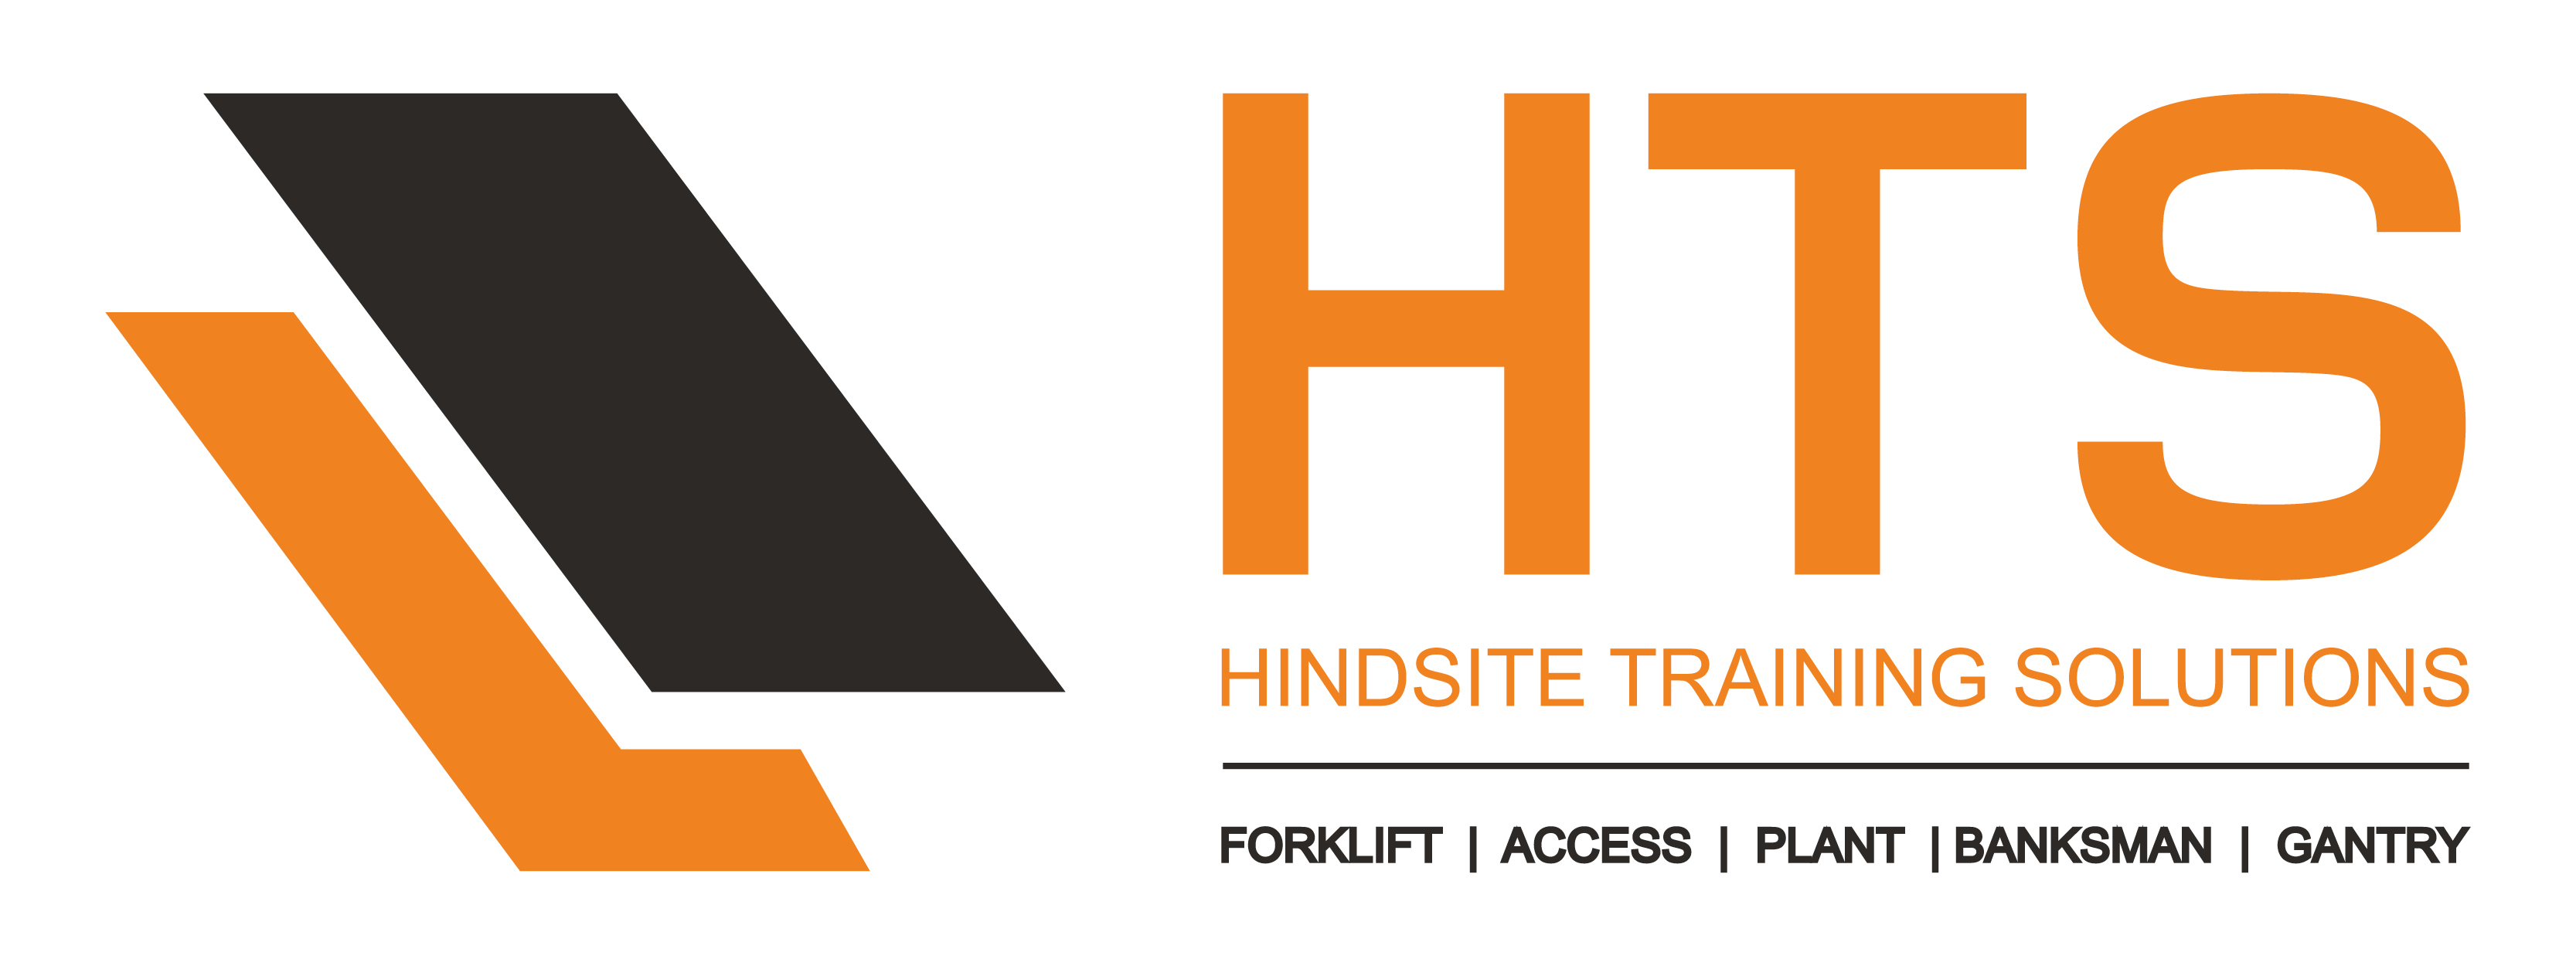 Hindsite Training Solutions